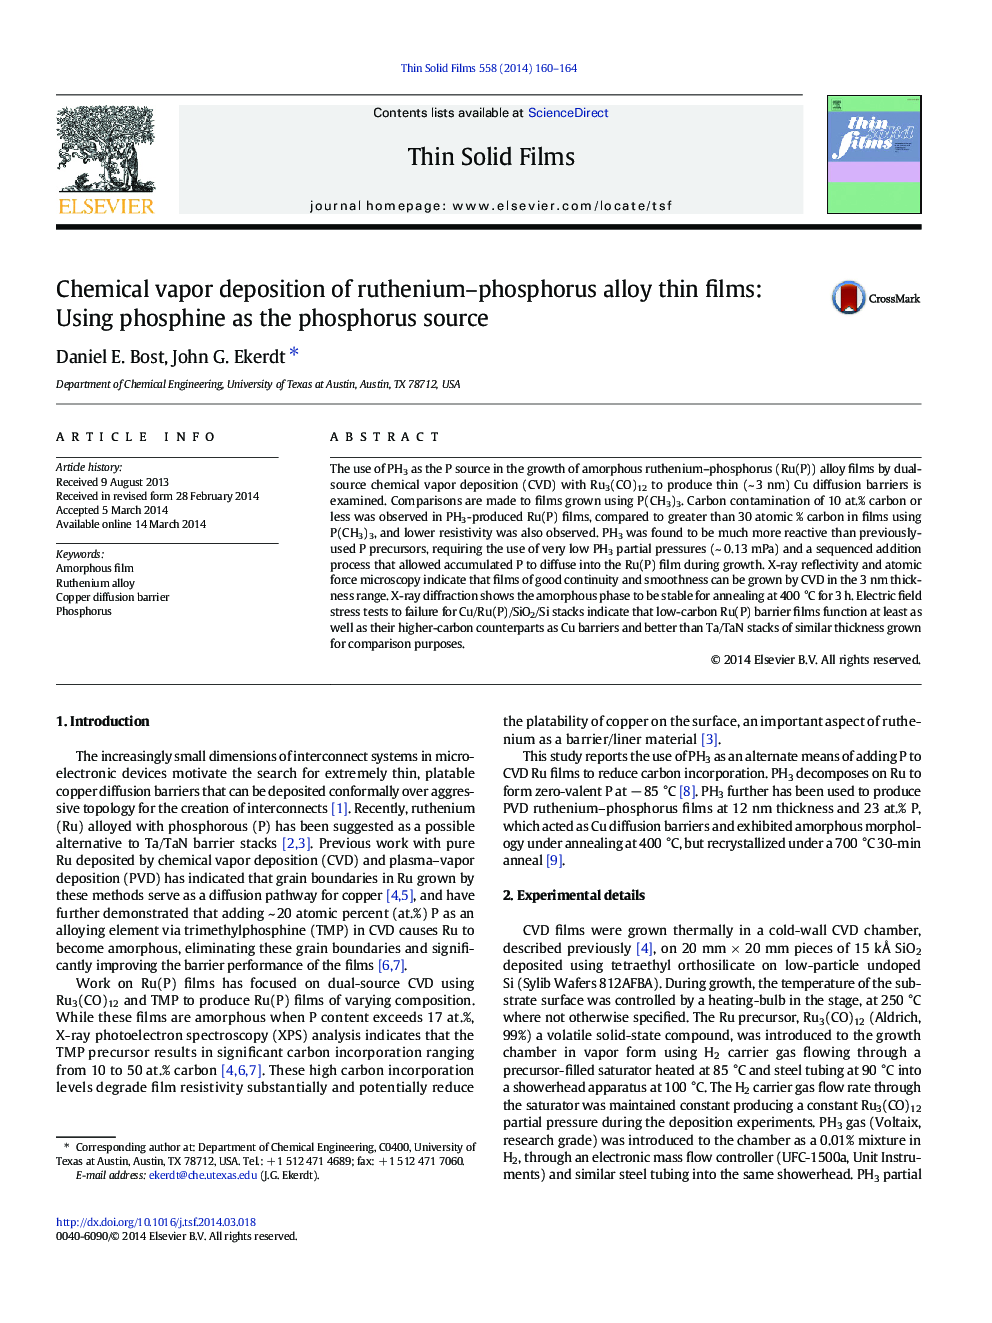 Chemical vapor deposition of ruthenium–phosphorus alloy thin films: Using phosphine as the phosphorus source